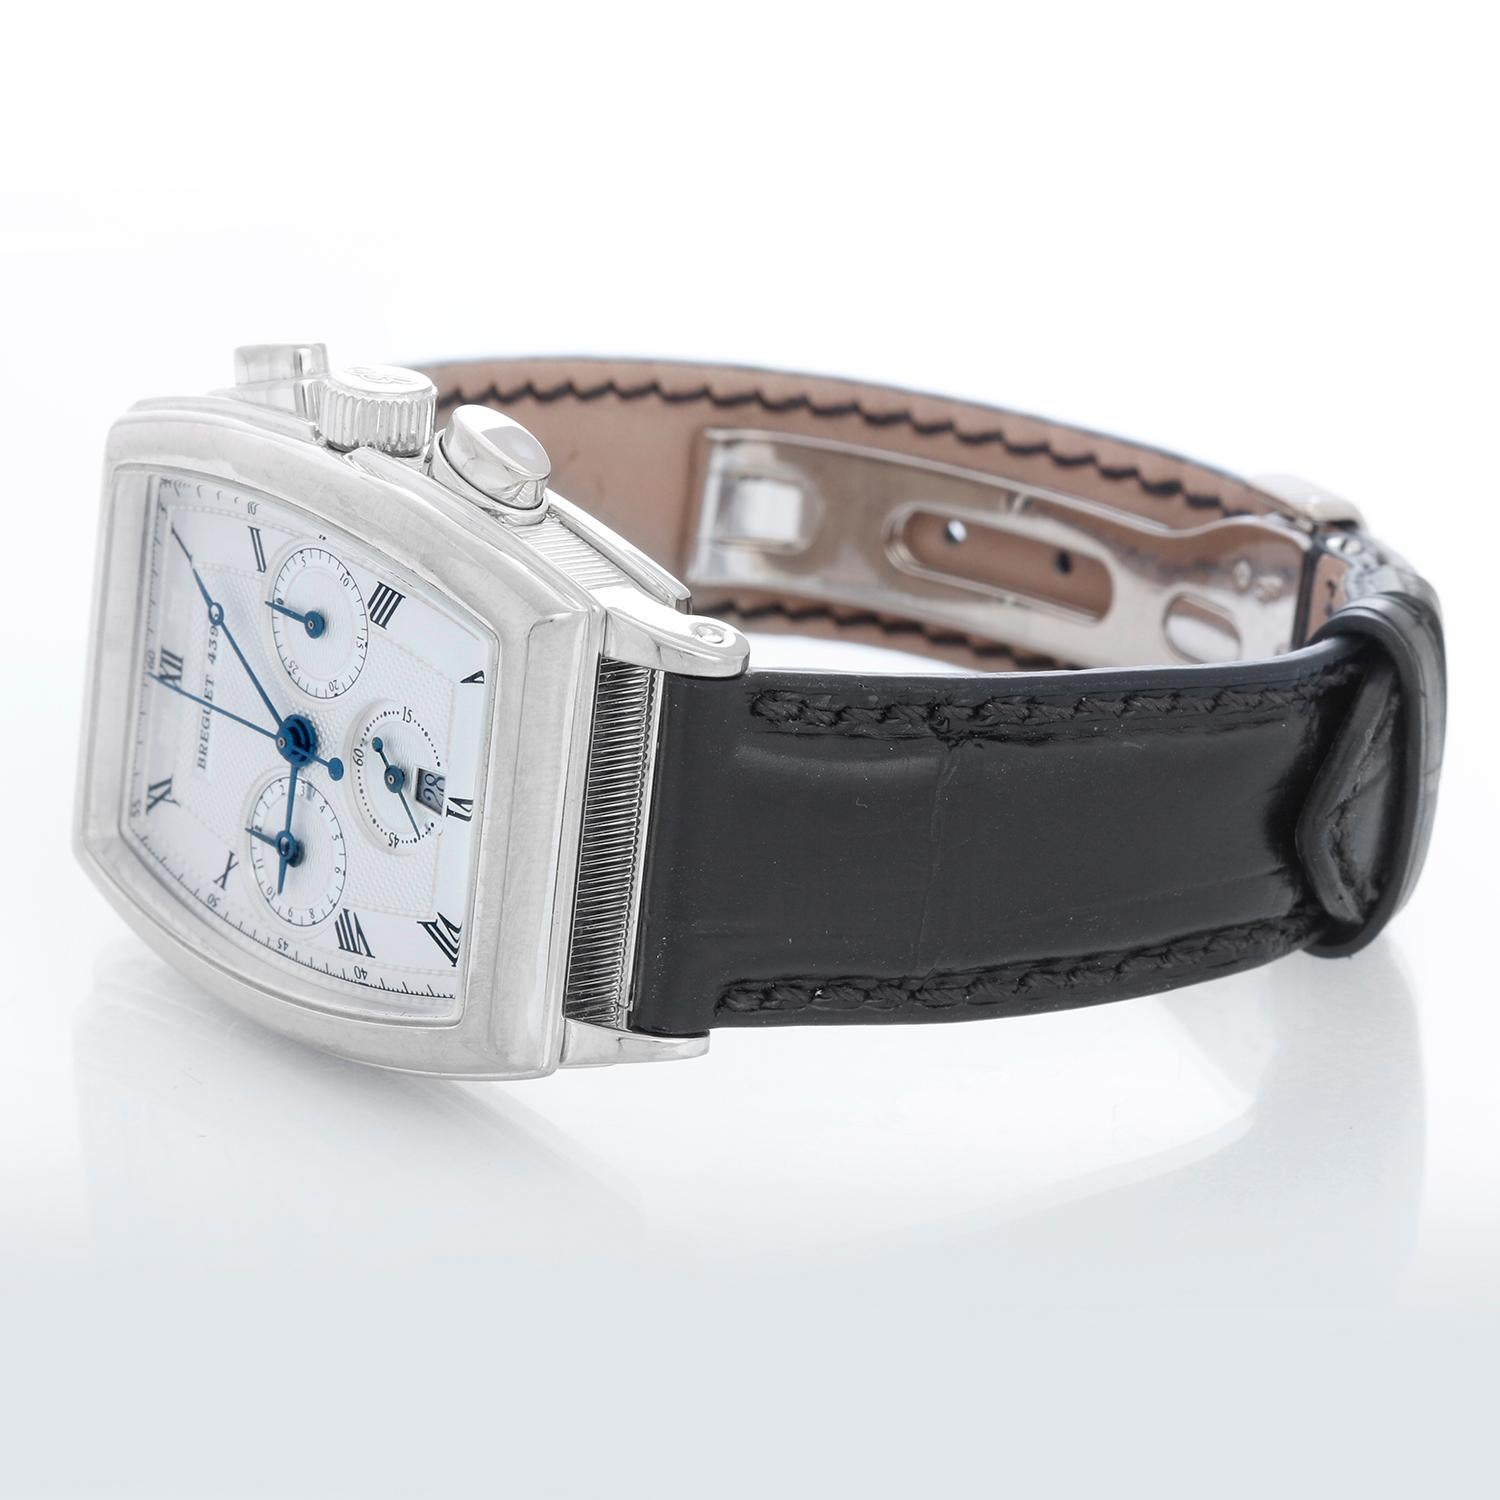 Breguet Heritage Chronograph White Gold Watch 5460/12/996 Men's Watch 2